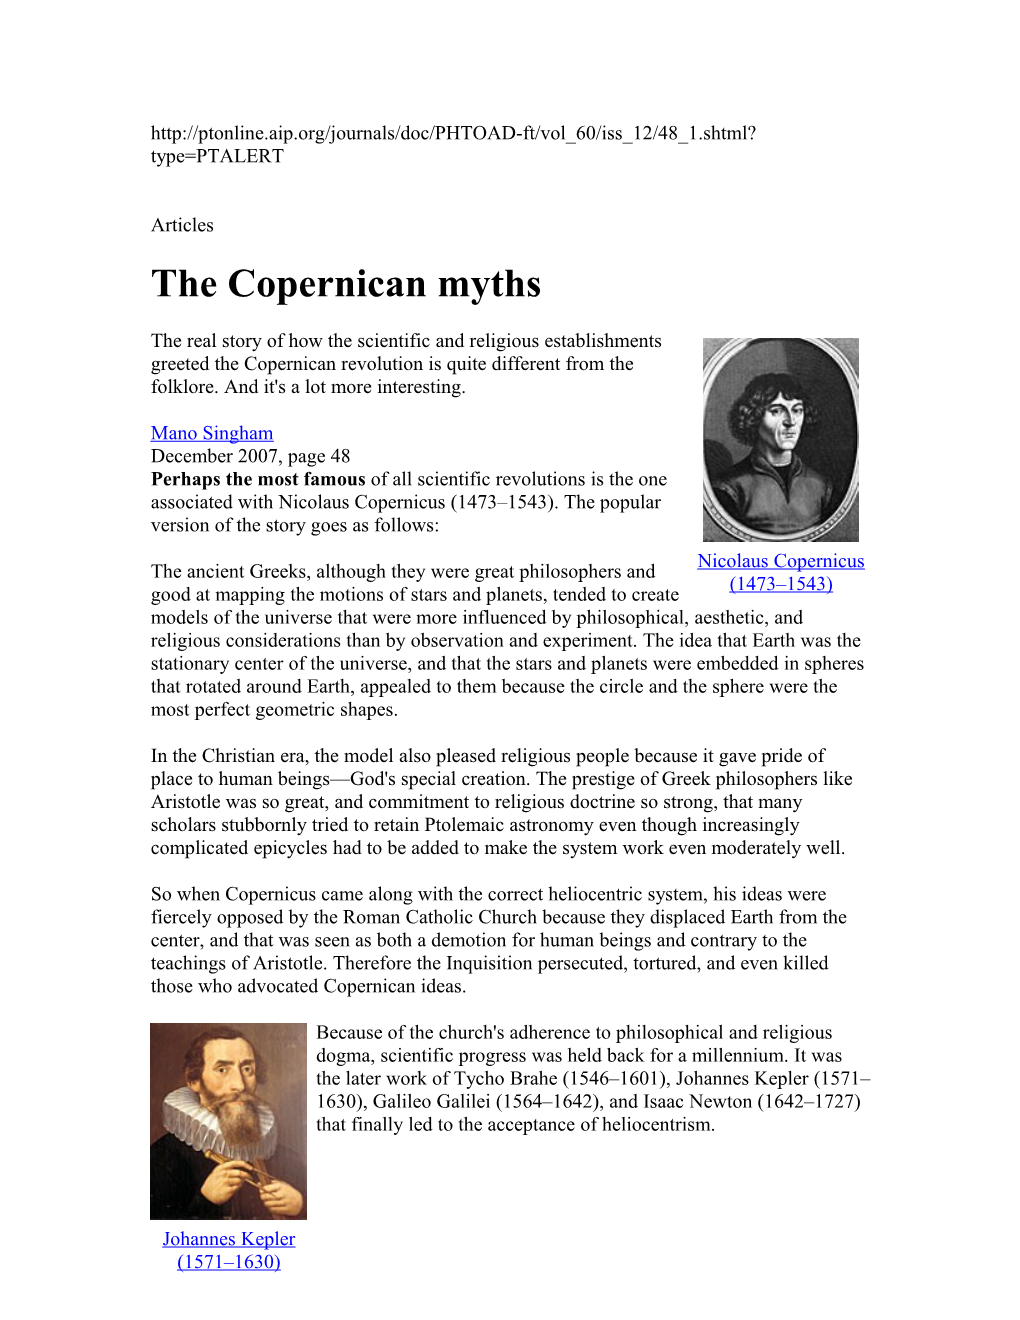 The Copernican Myths